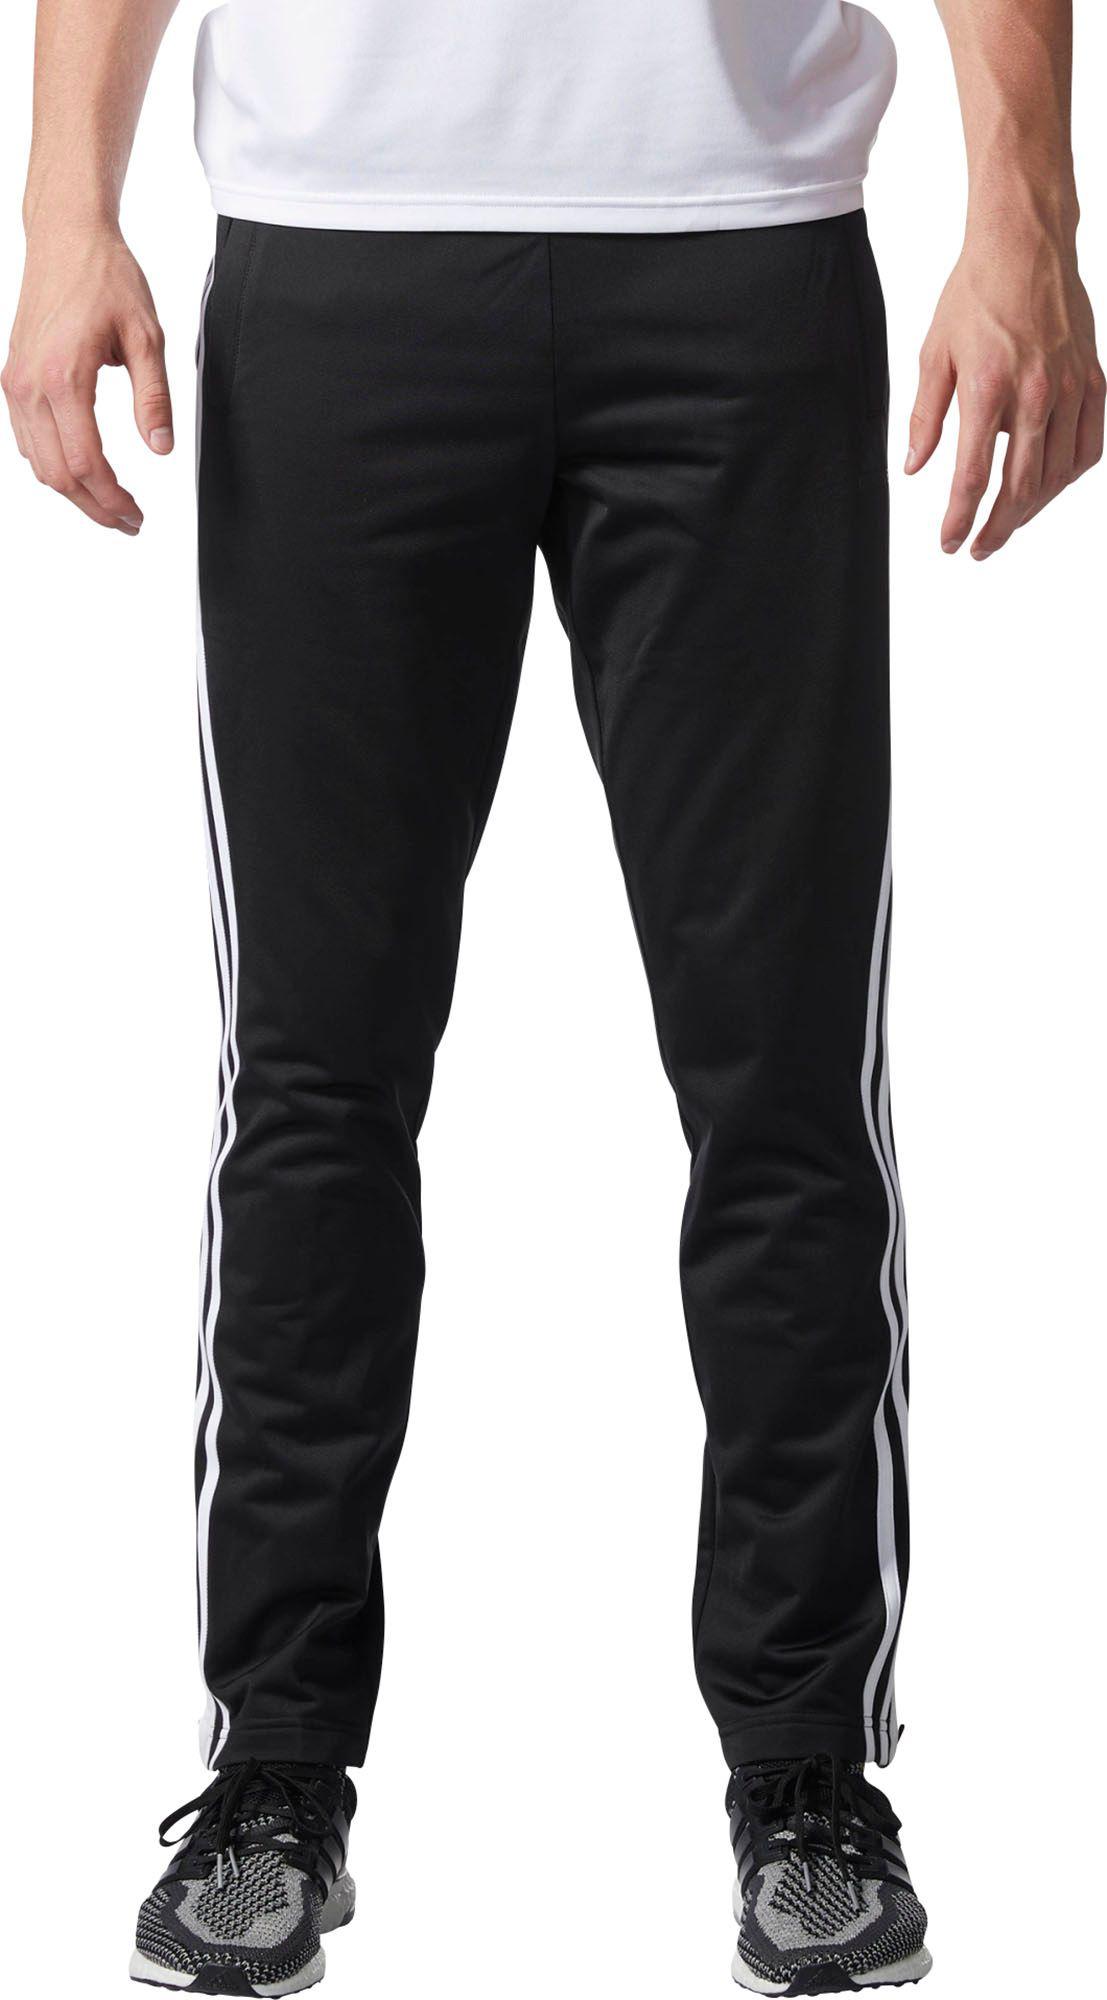 Lyst - Adidas Essentials Tricot Zipper Pants in Black for Men